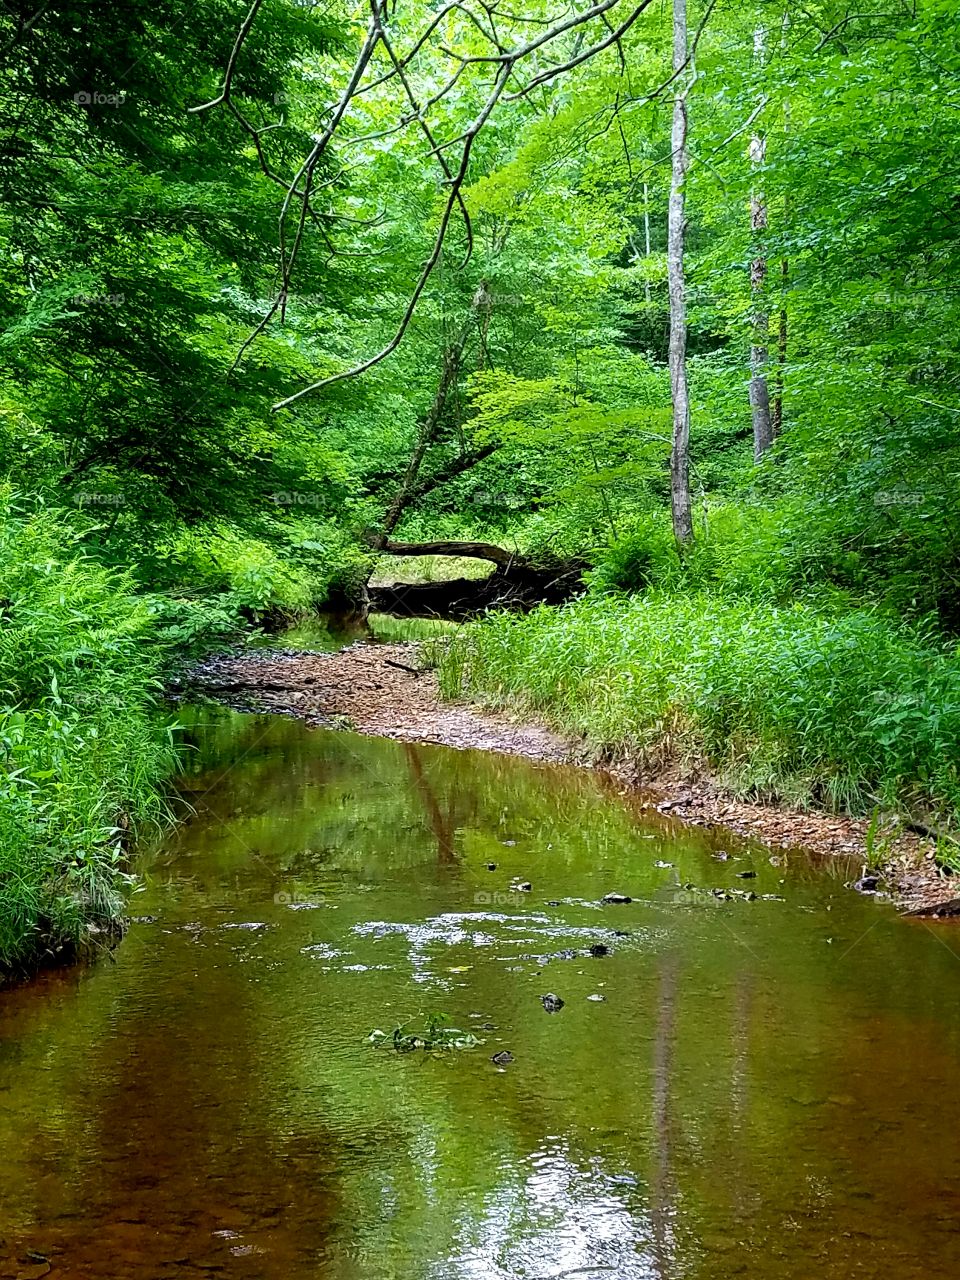 Flowing water through woodland